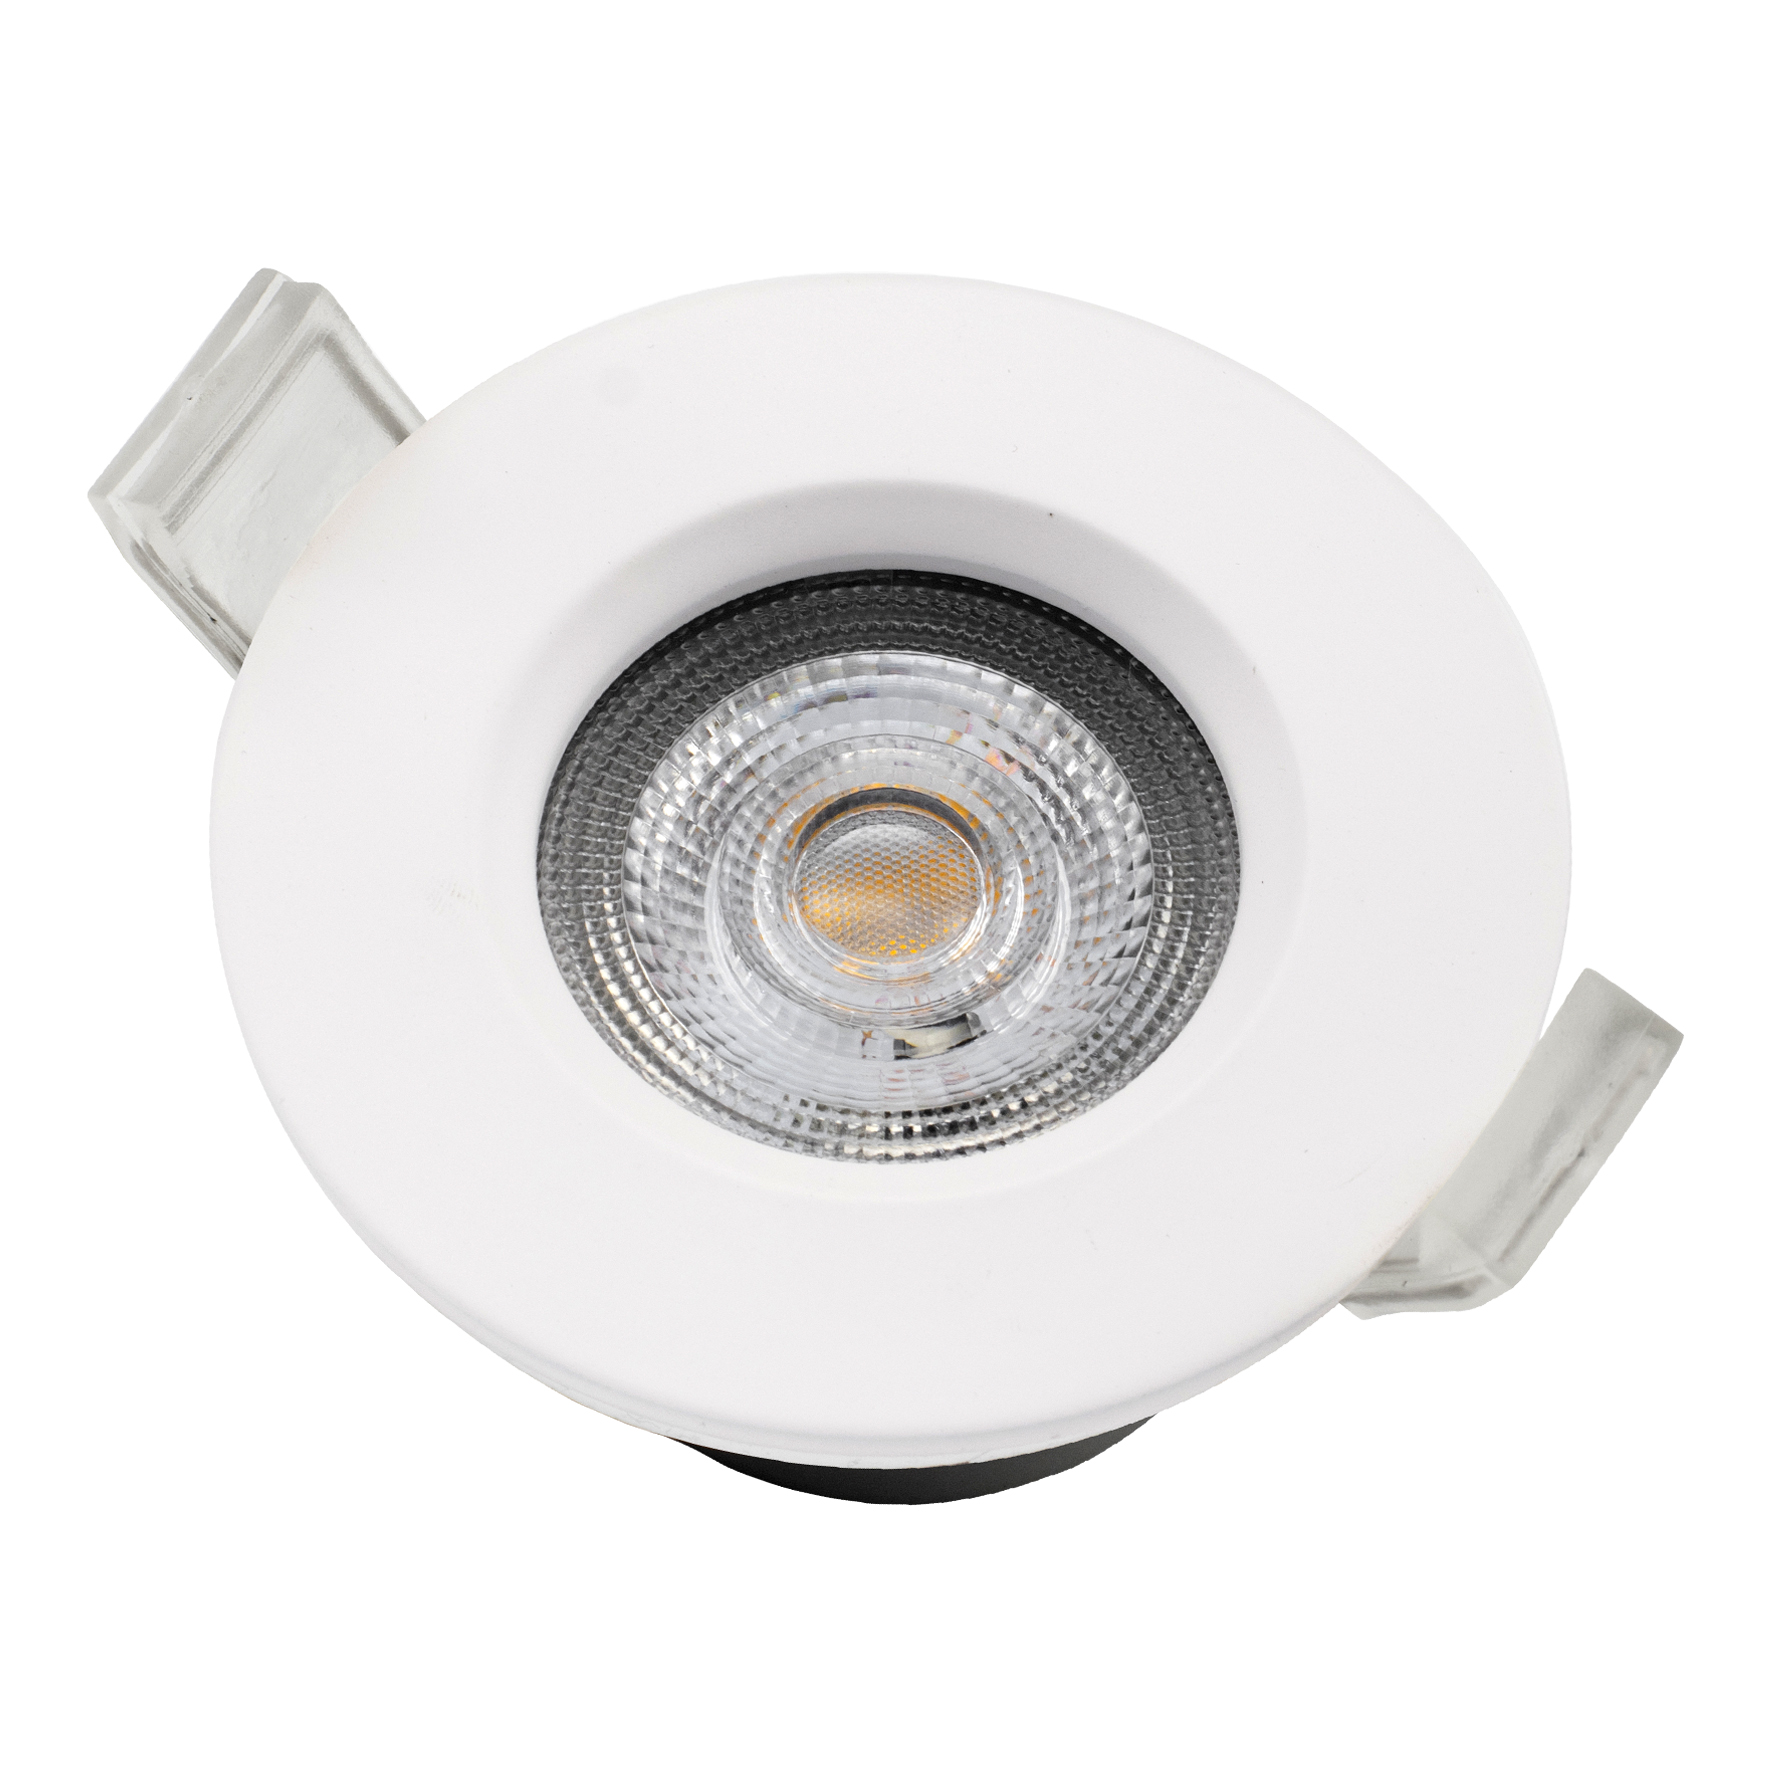 TUN LED Downlight 5W 830 IP65 White Round 85mm